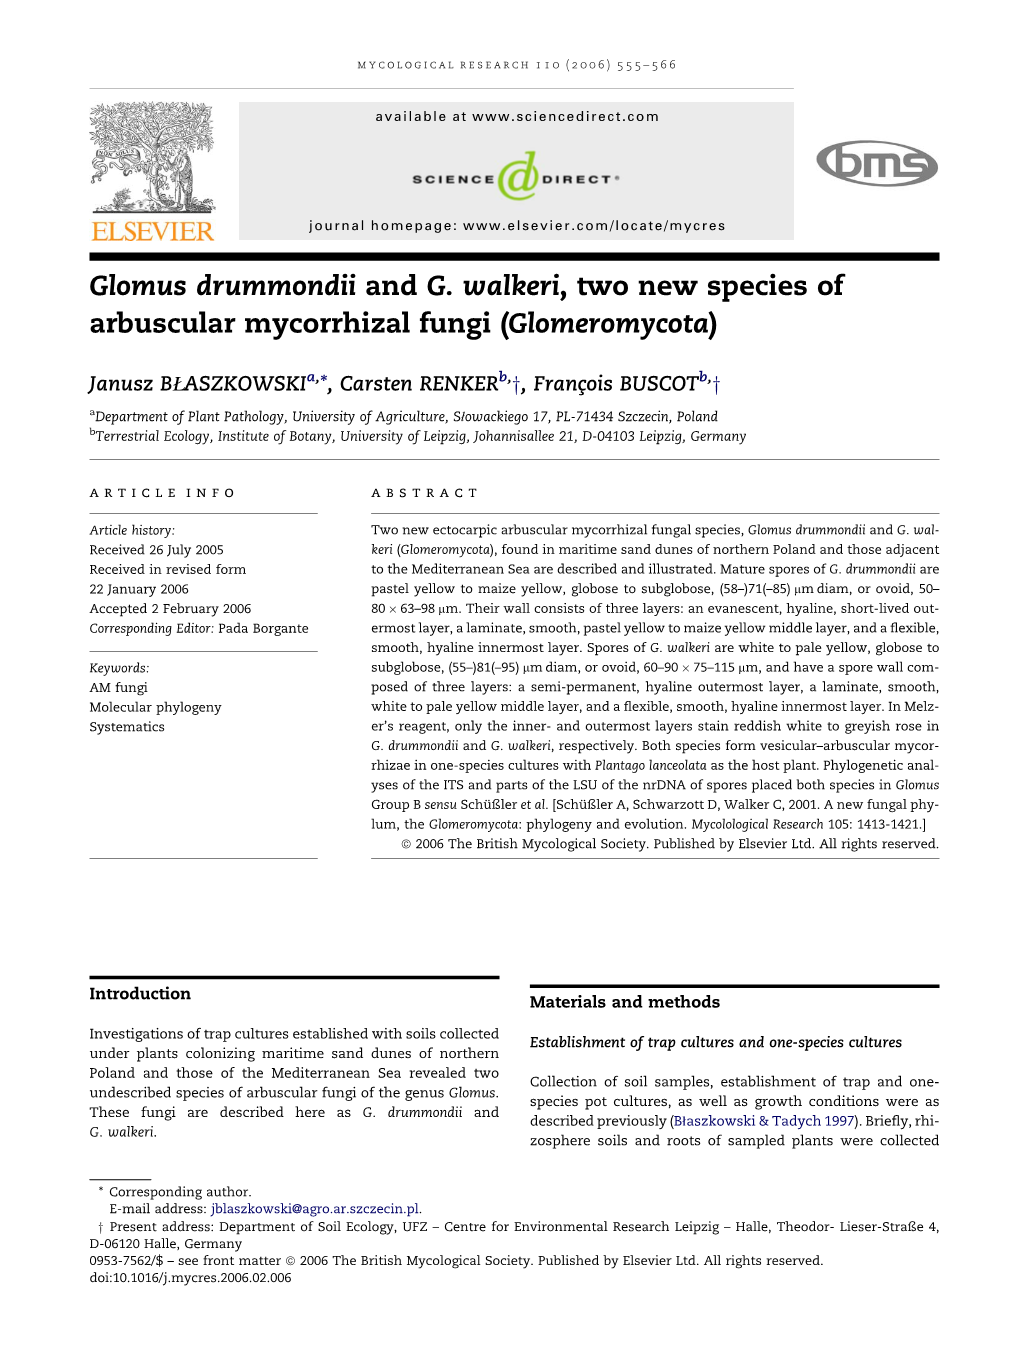 Glomus Drummondii and G. Walkeri, Two New Species of Arbuscular Mycorrhizal Fungi (Glomeromycota)